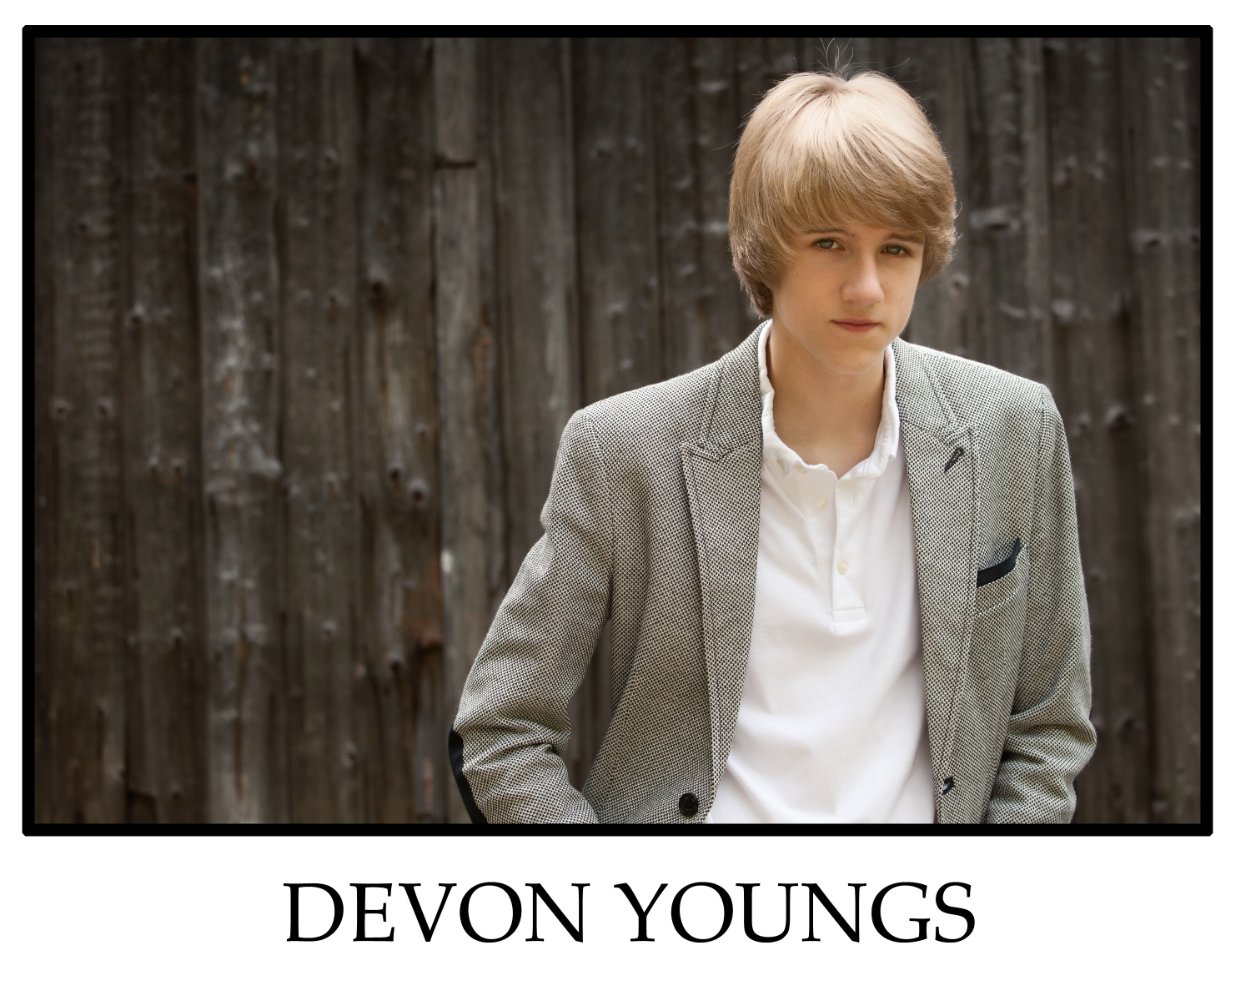 Devon Youngs